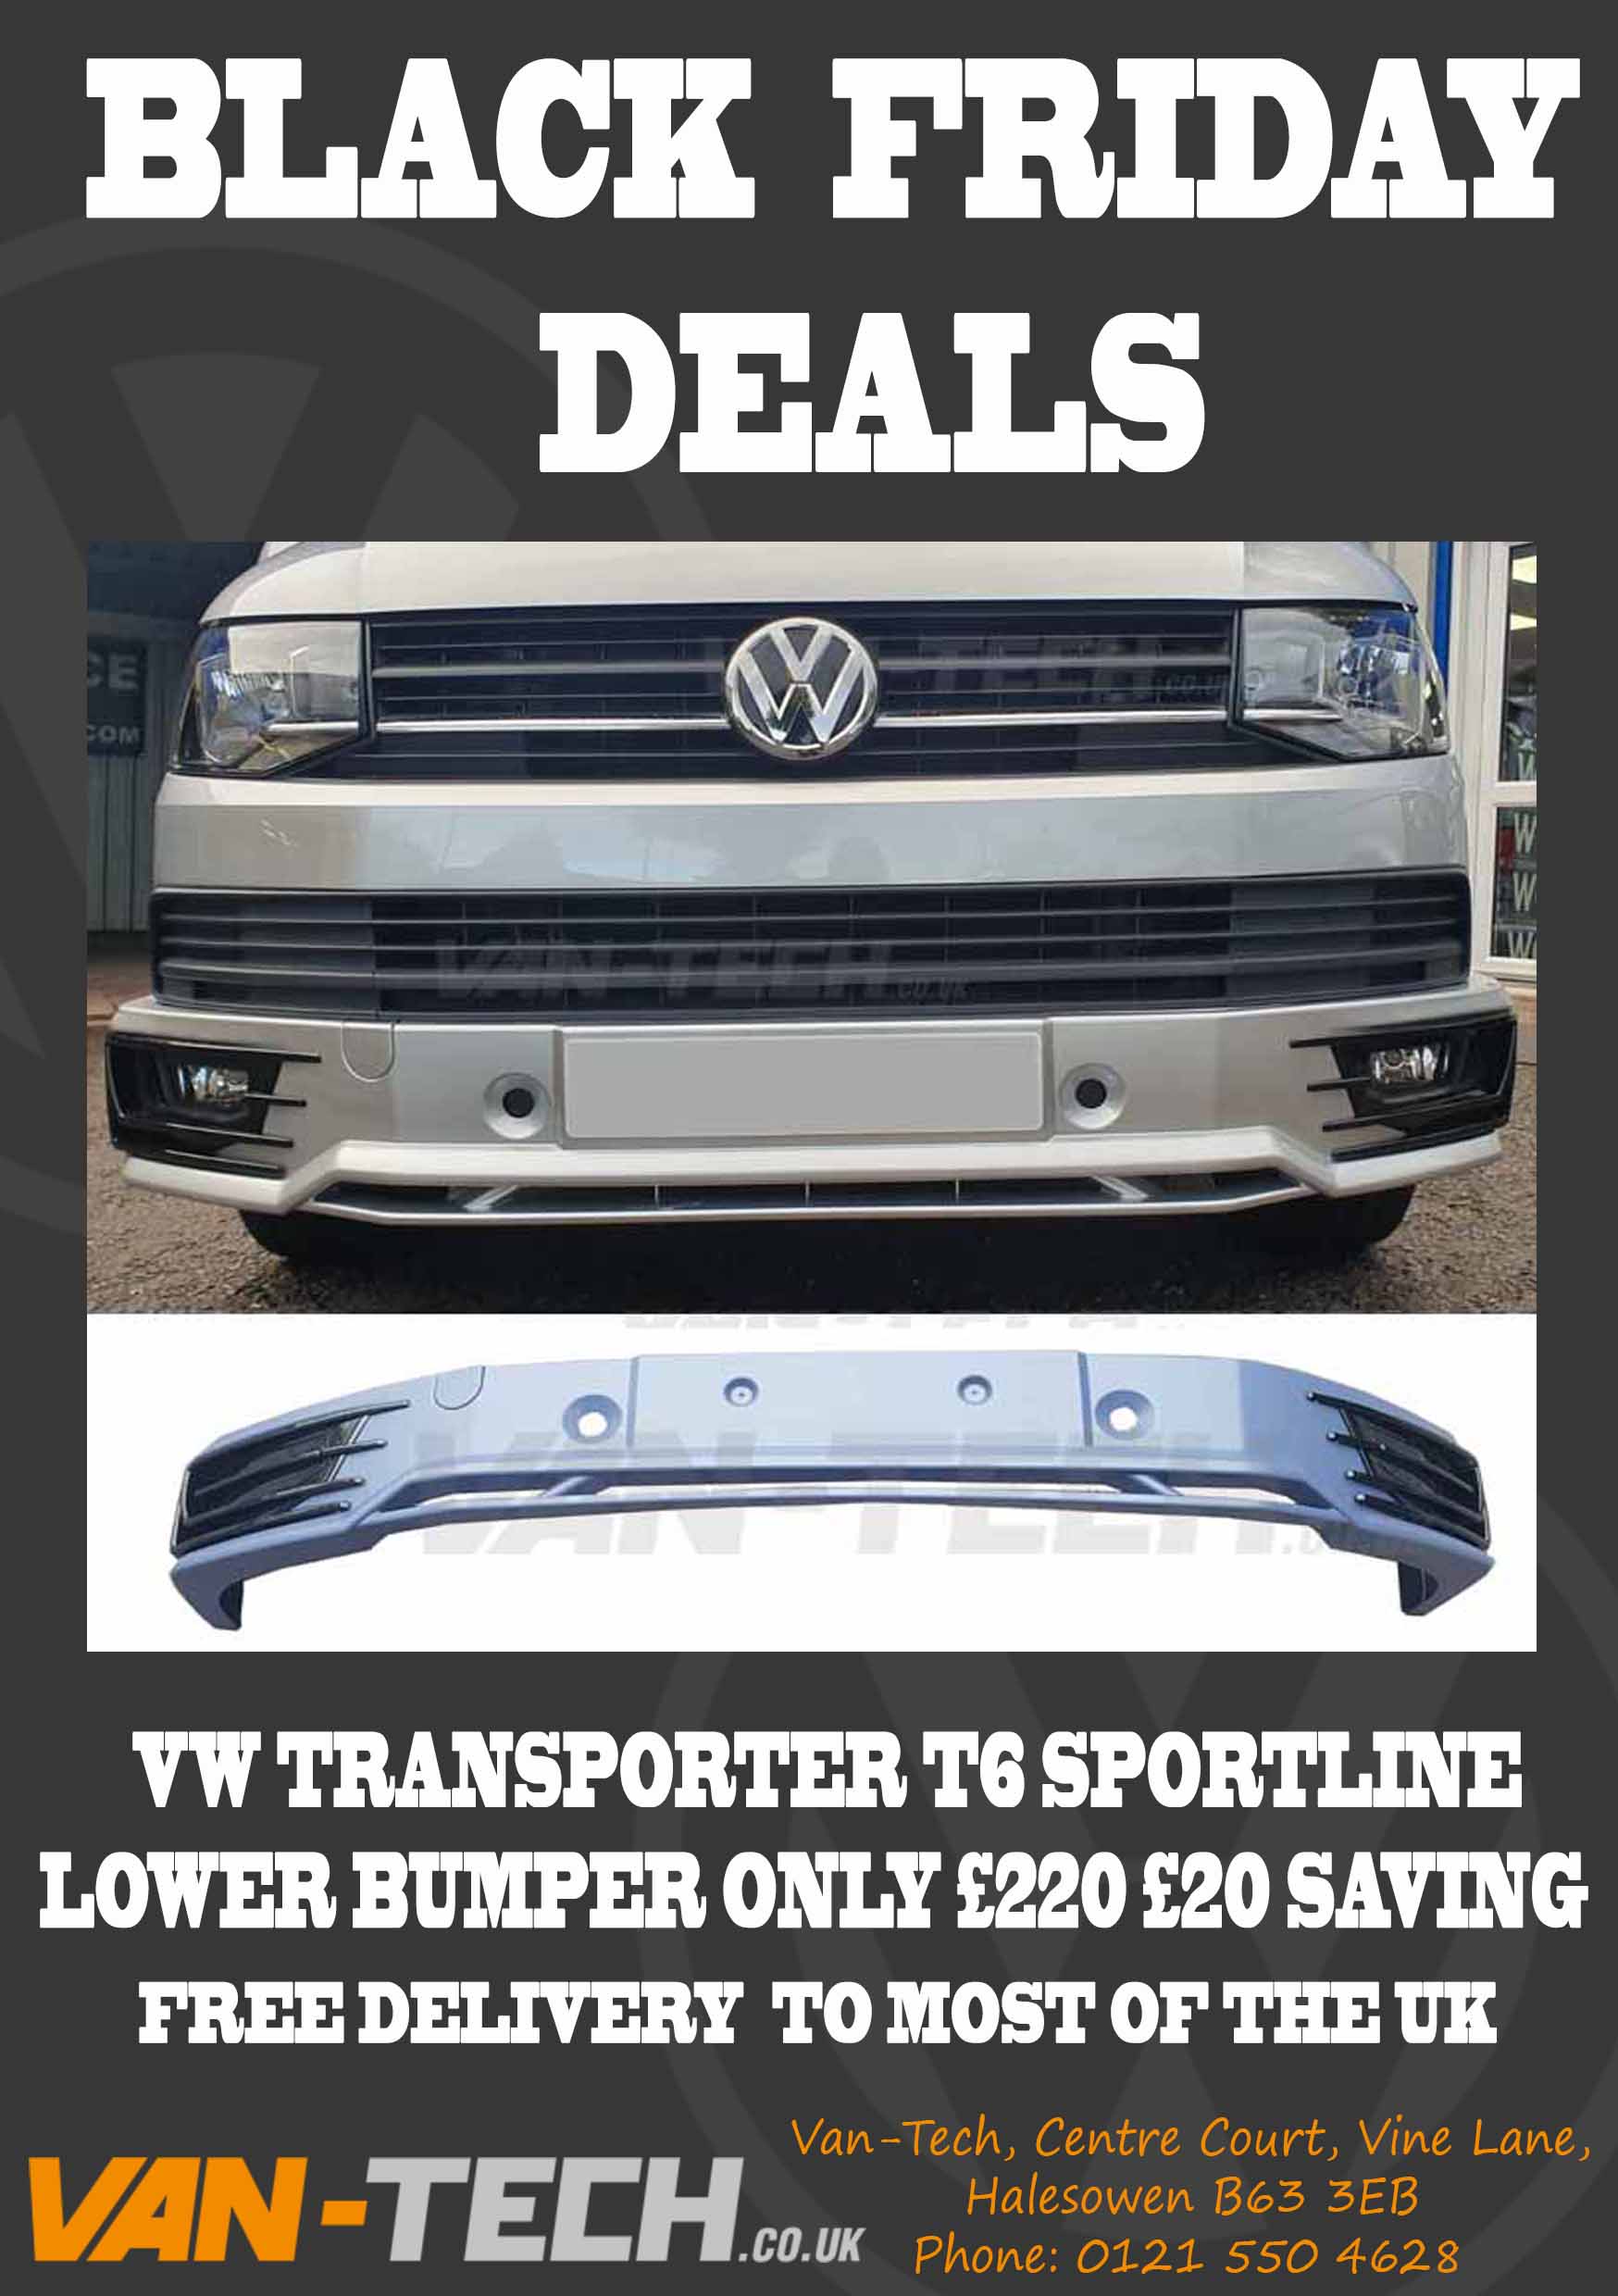 VW Transporter T6 Black Friday Deals available at Van-Tech